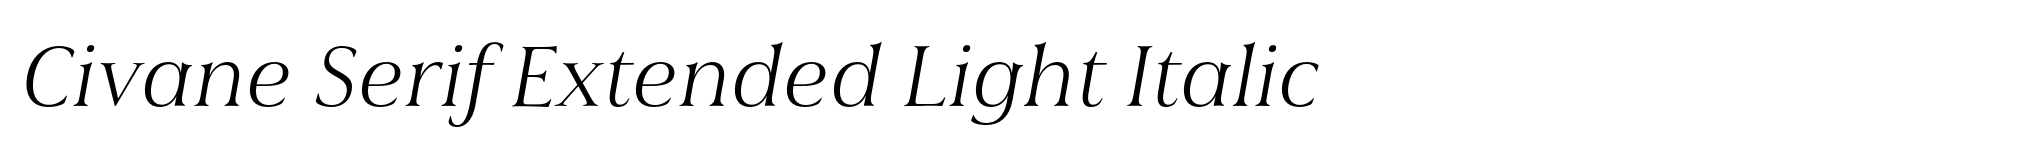 Civane Serif Extended Light Italic image